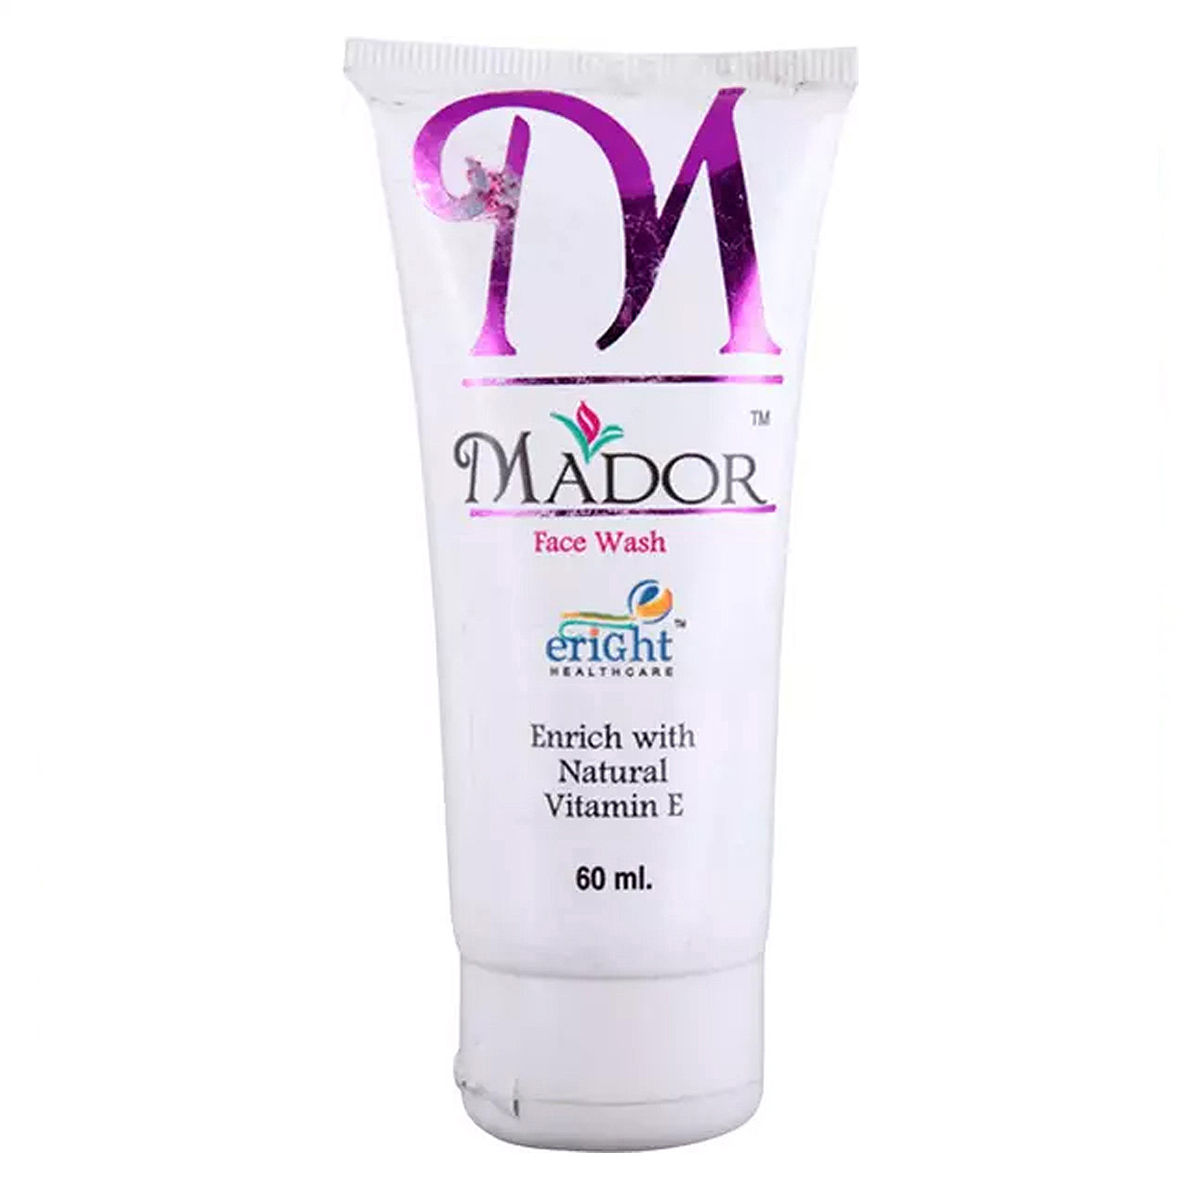 Buy Mador Face Wash, 60 ml Online